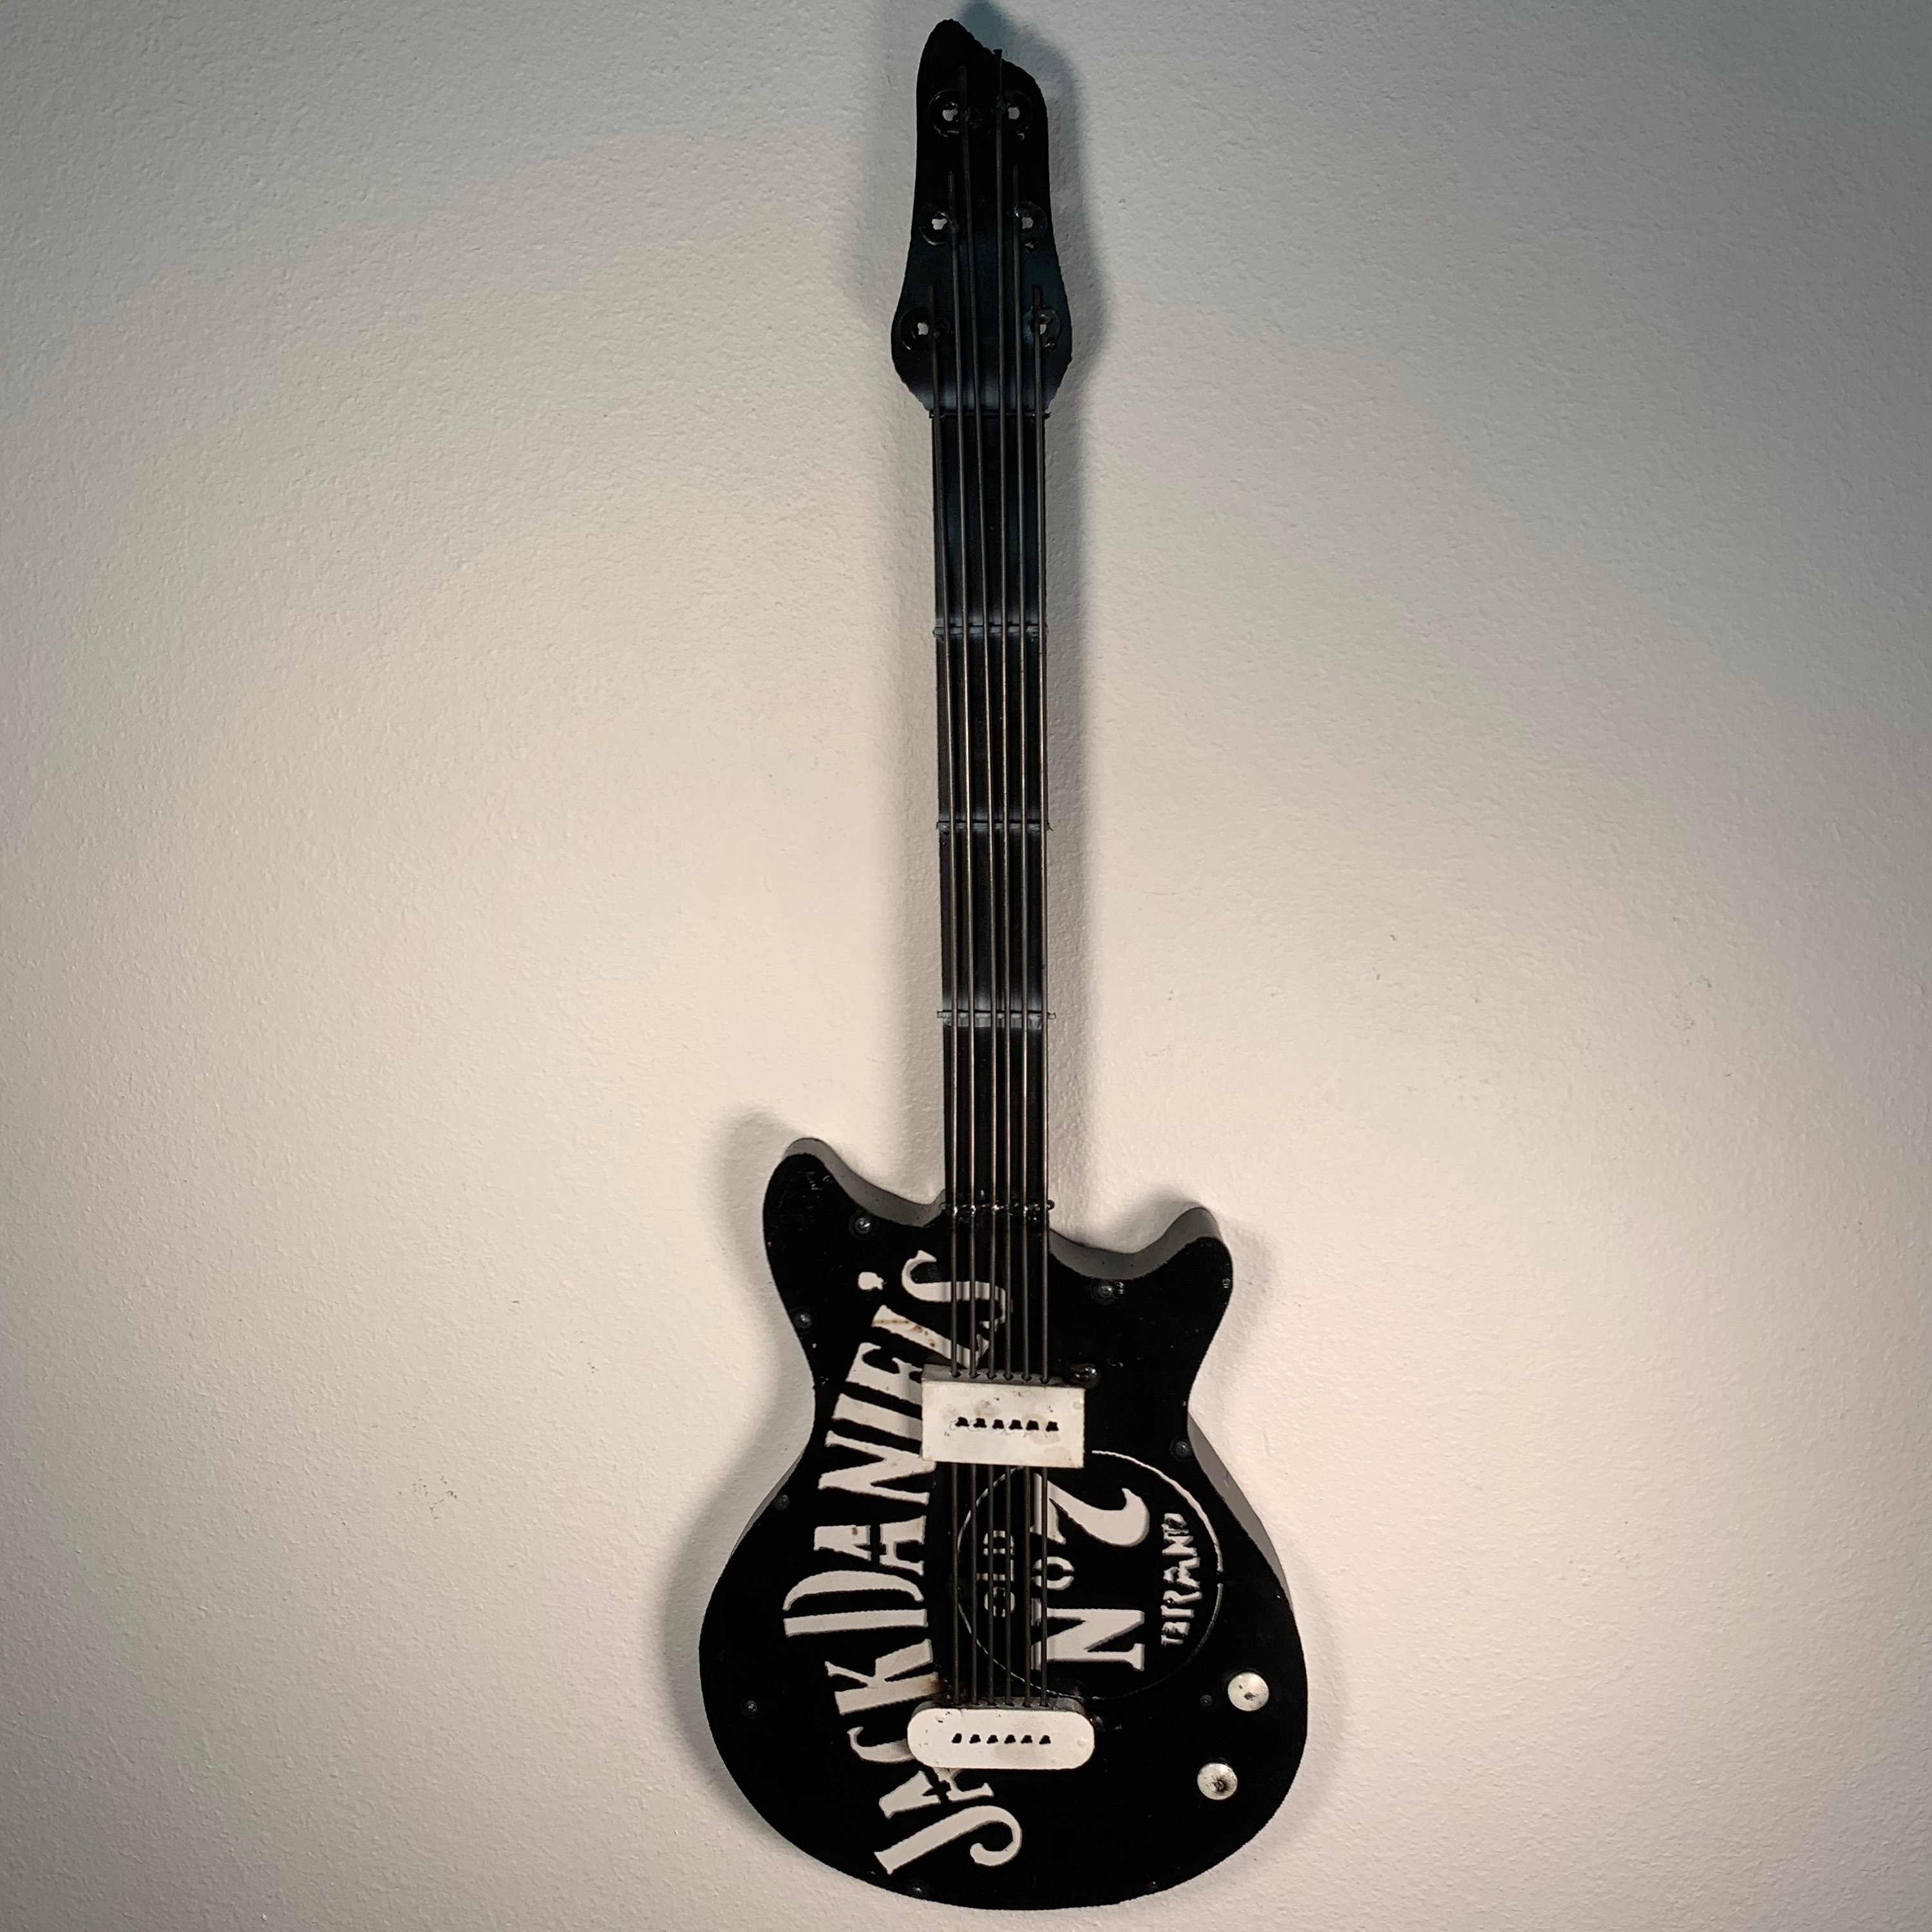 Jack Daniels 7 Wall Decoration Guitar 